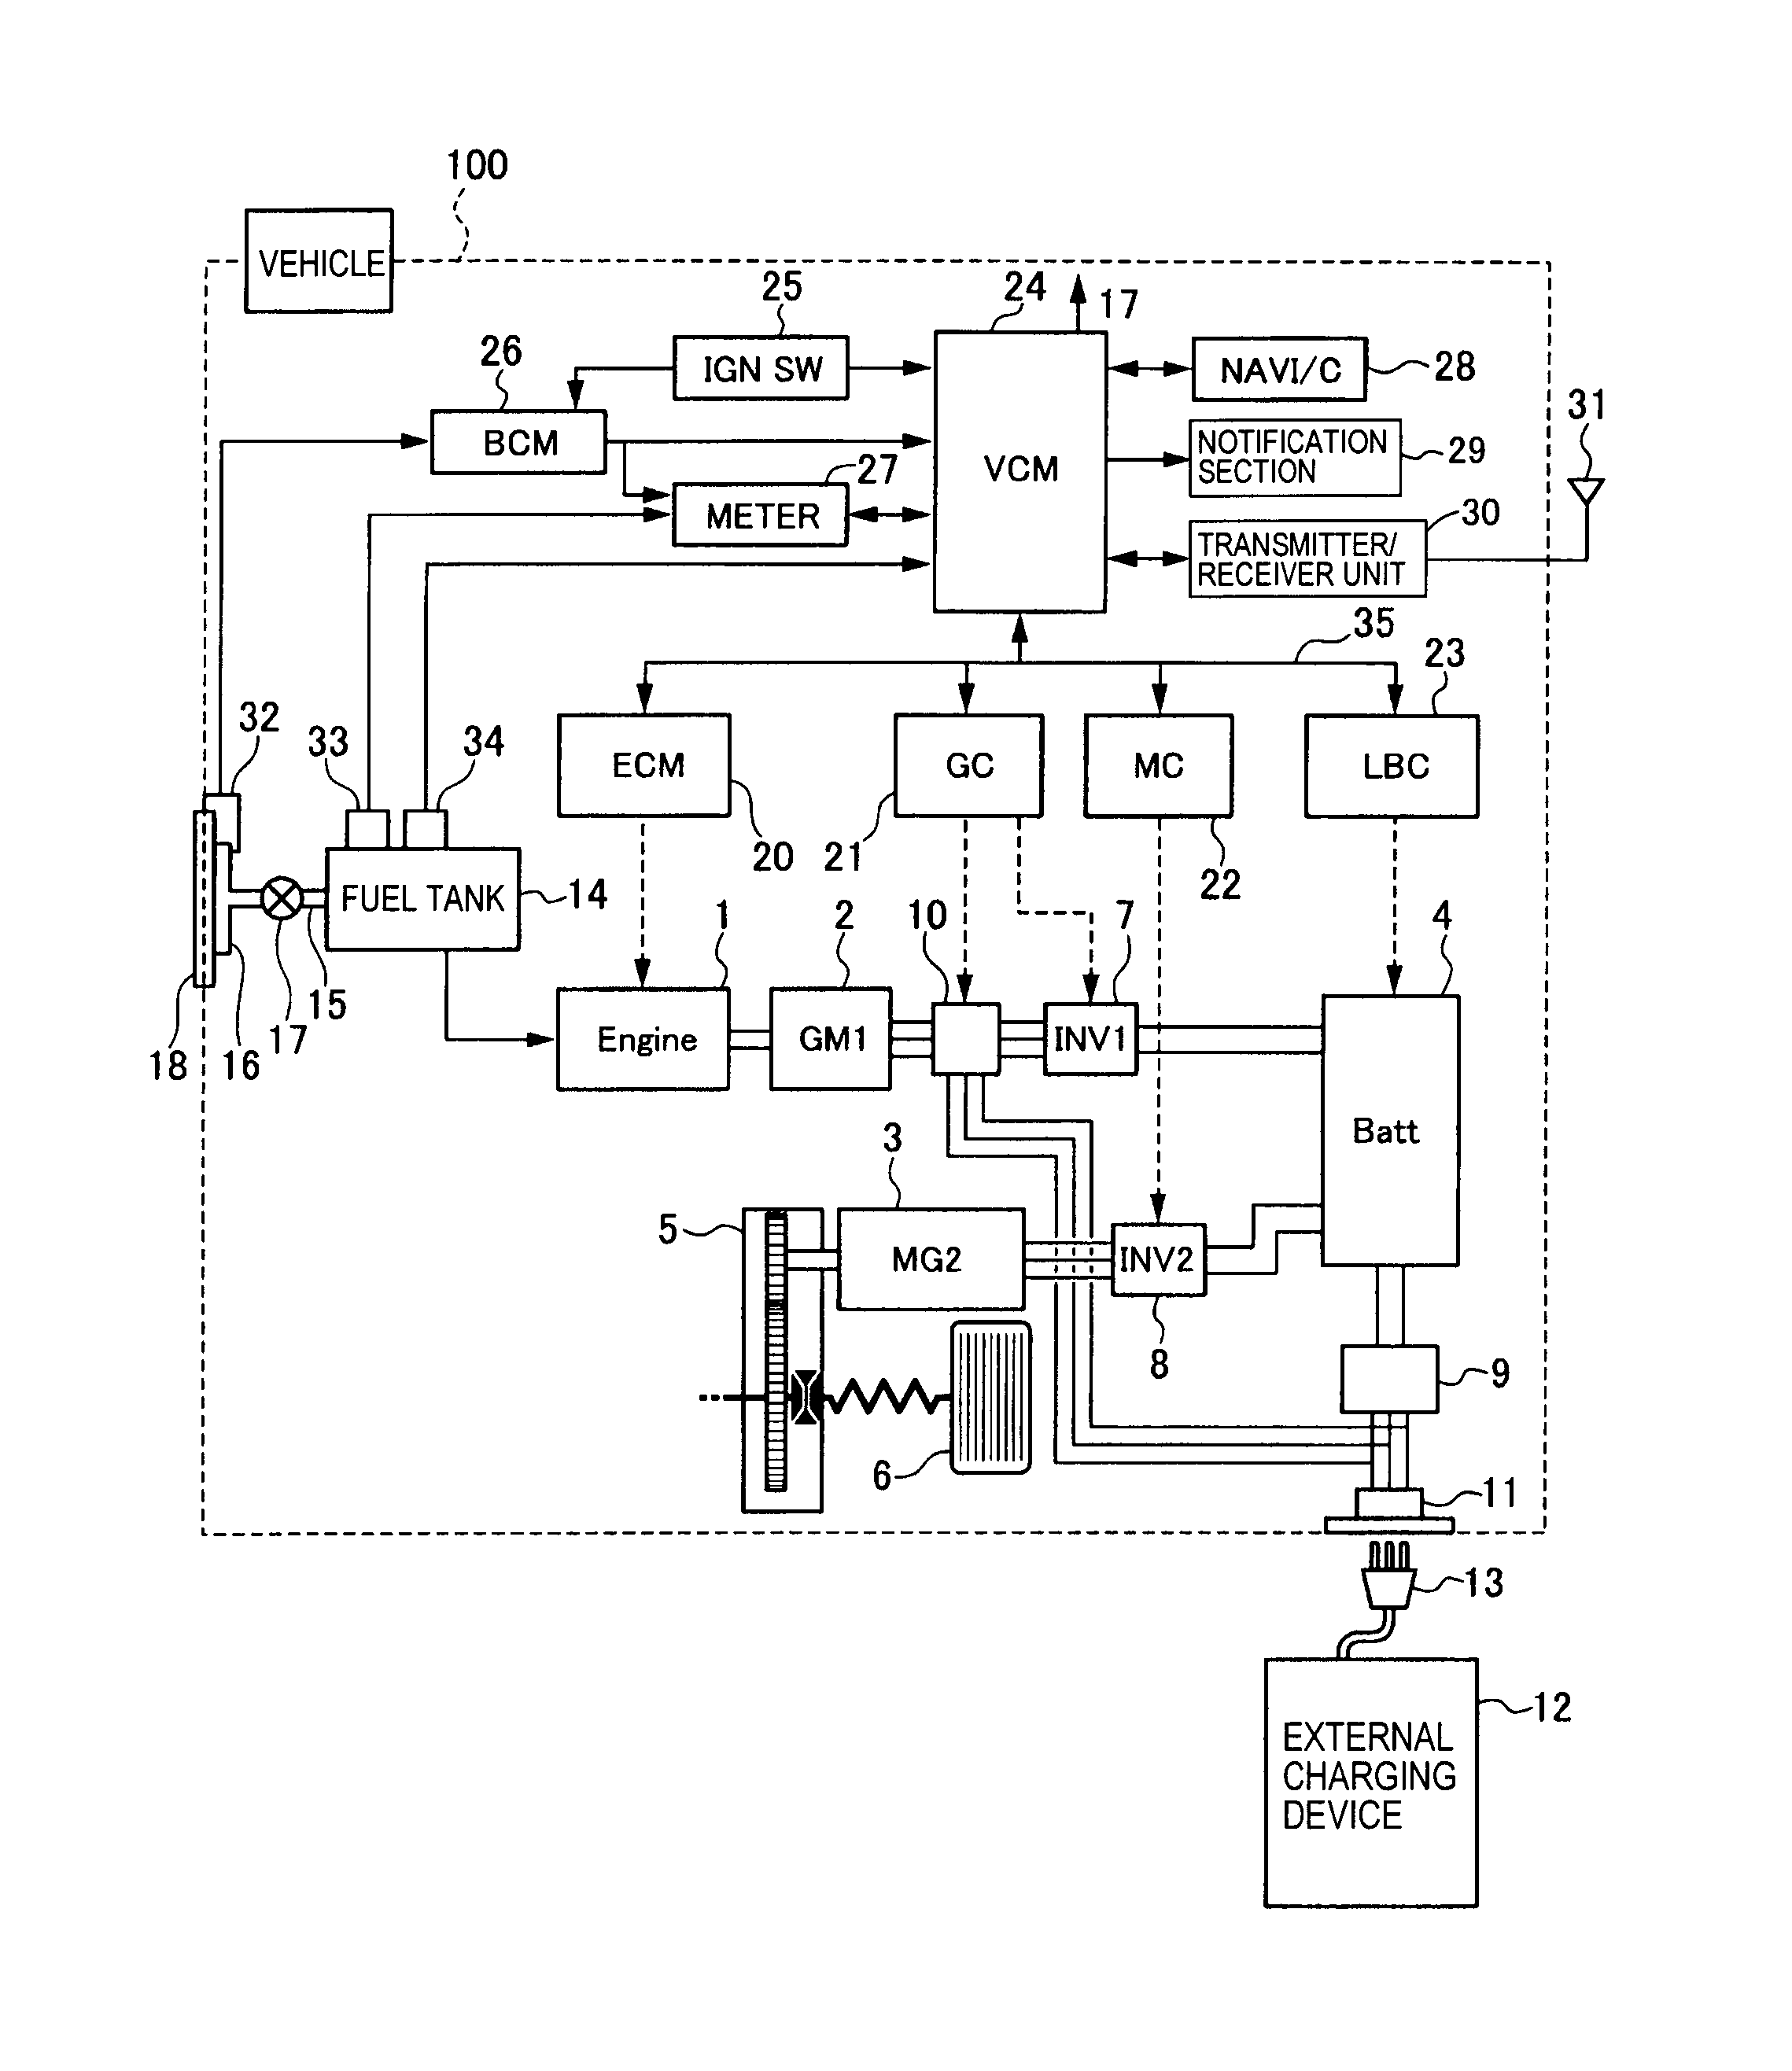 upbuilder chassis wiring diagram